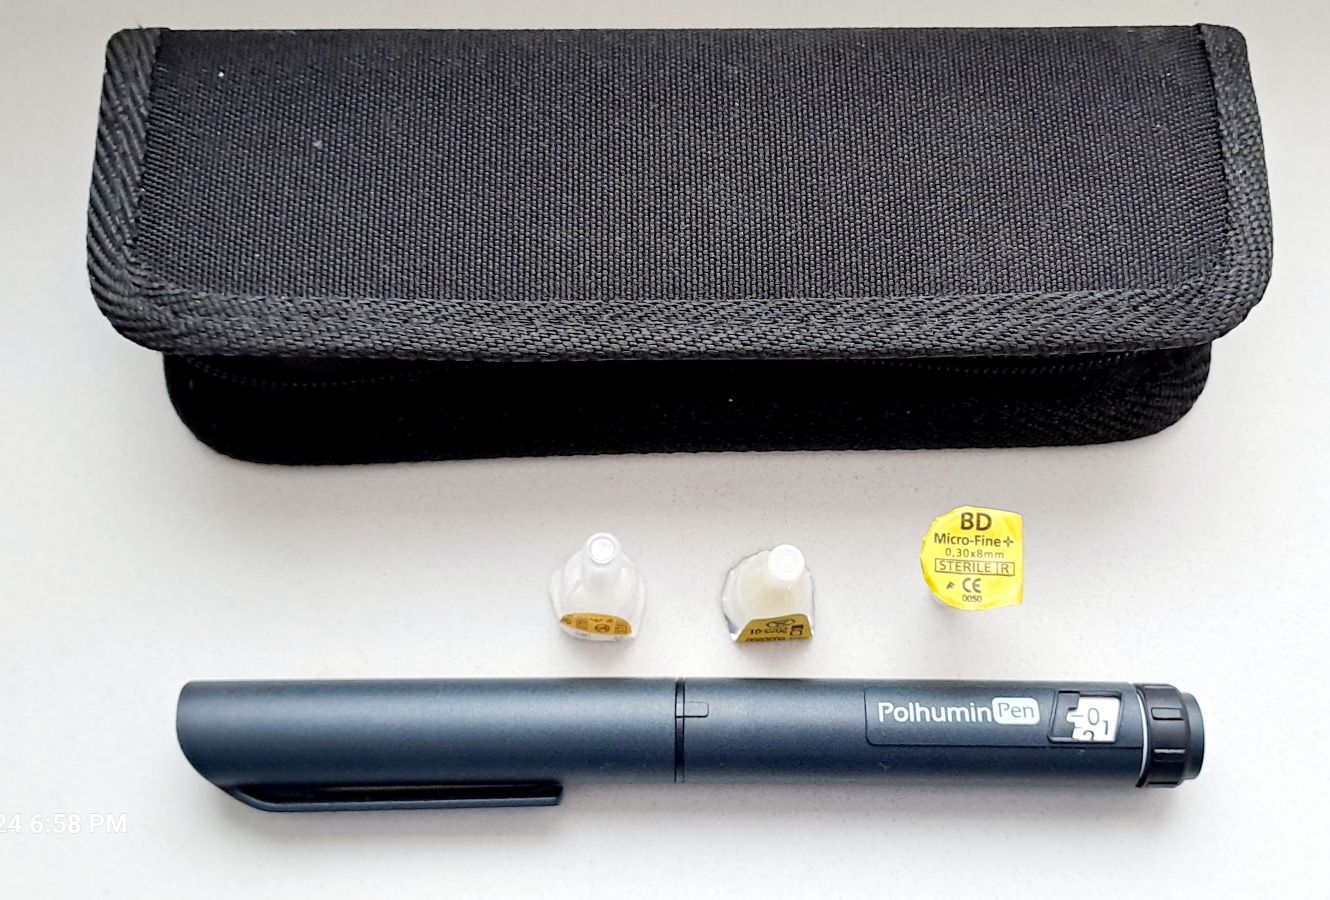 PoluminPen gratis 3 igły wstrzykiwacz insulina insulina Polhumin Pen